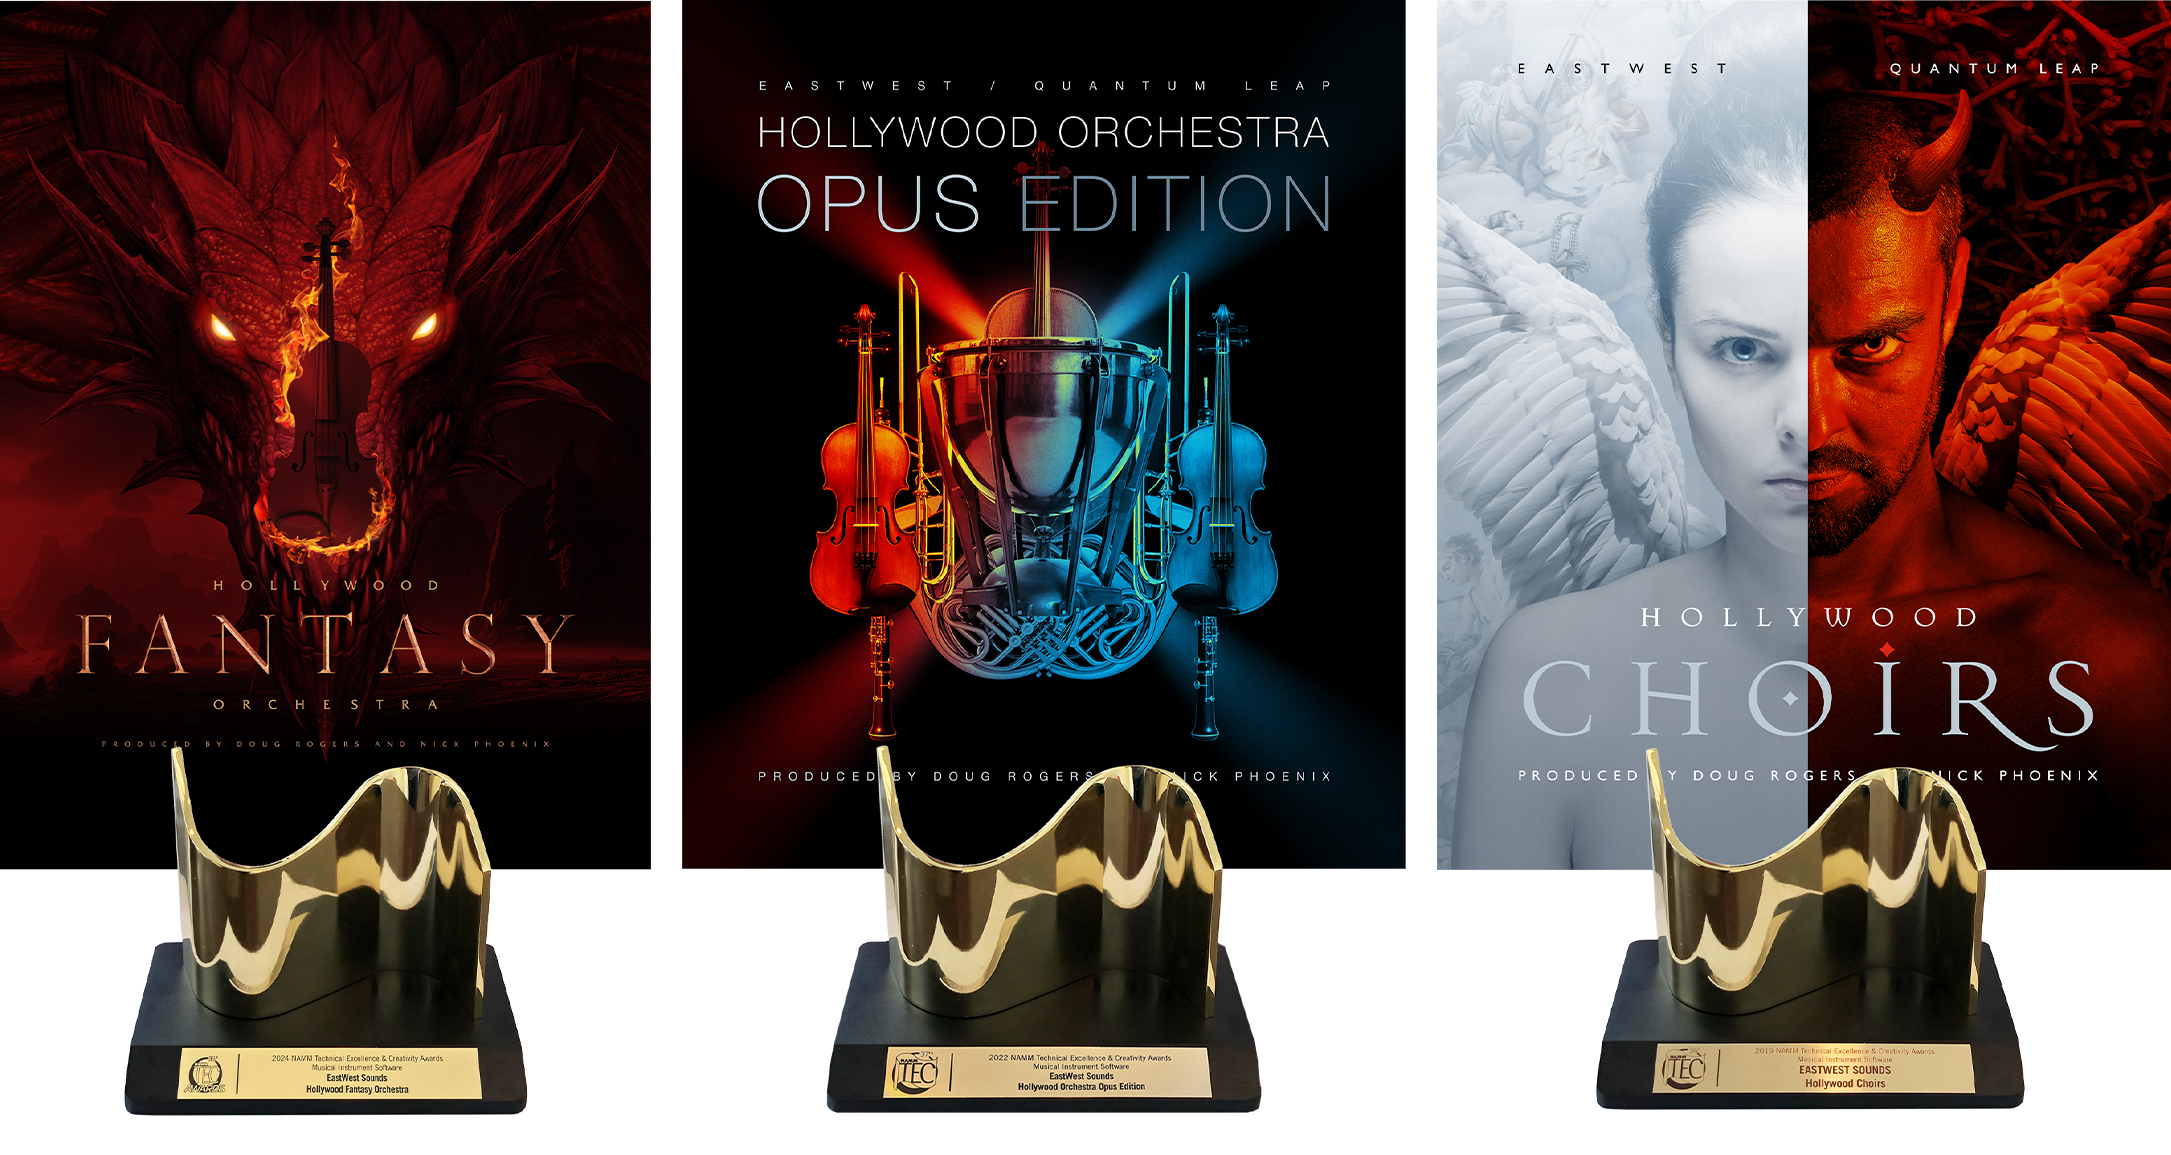 Hollywood Fantasy Orchestra, Hollywood Orchestra Opus Edition, Hollywood Choirs